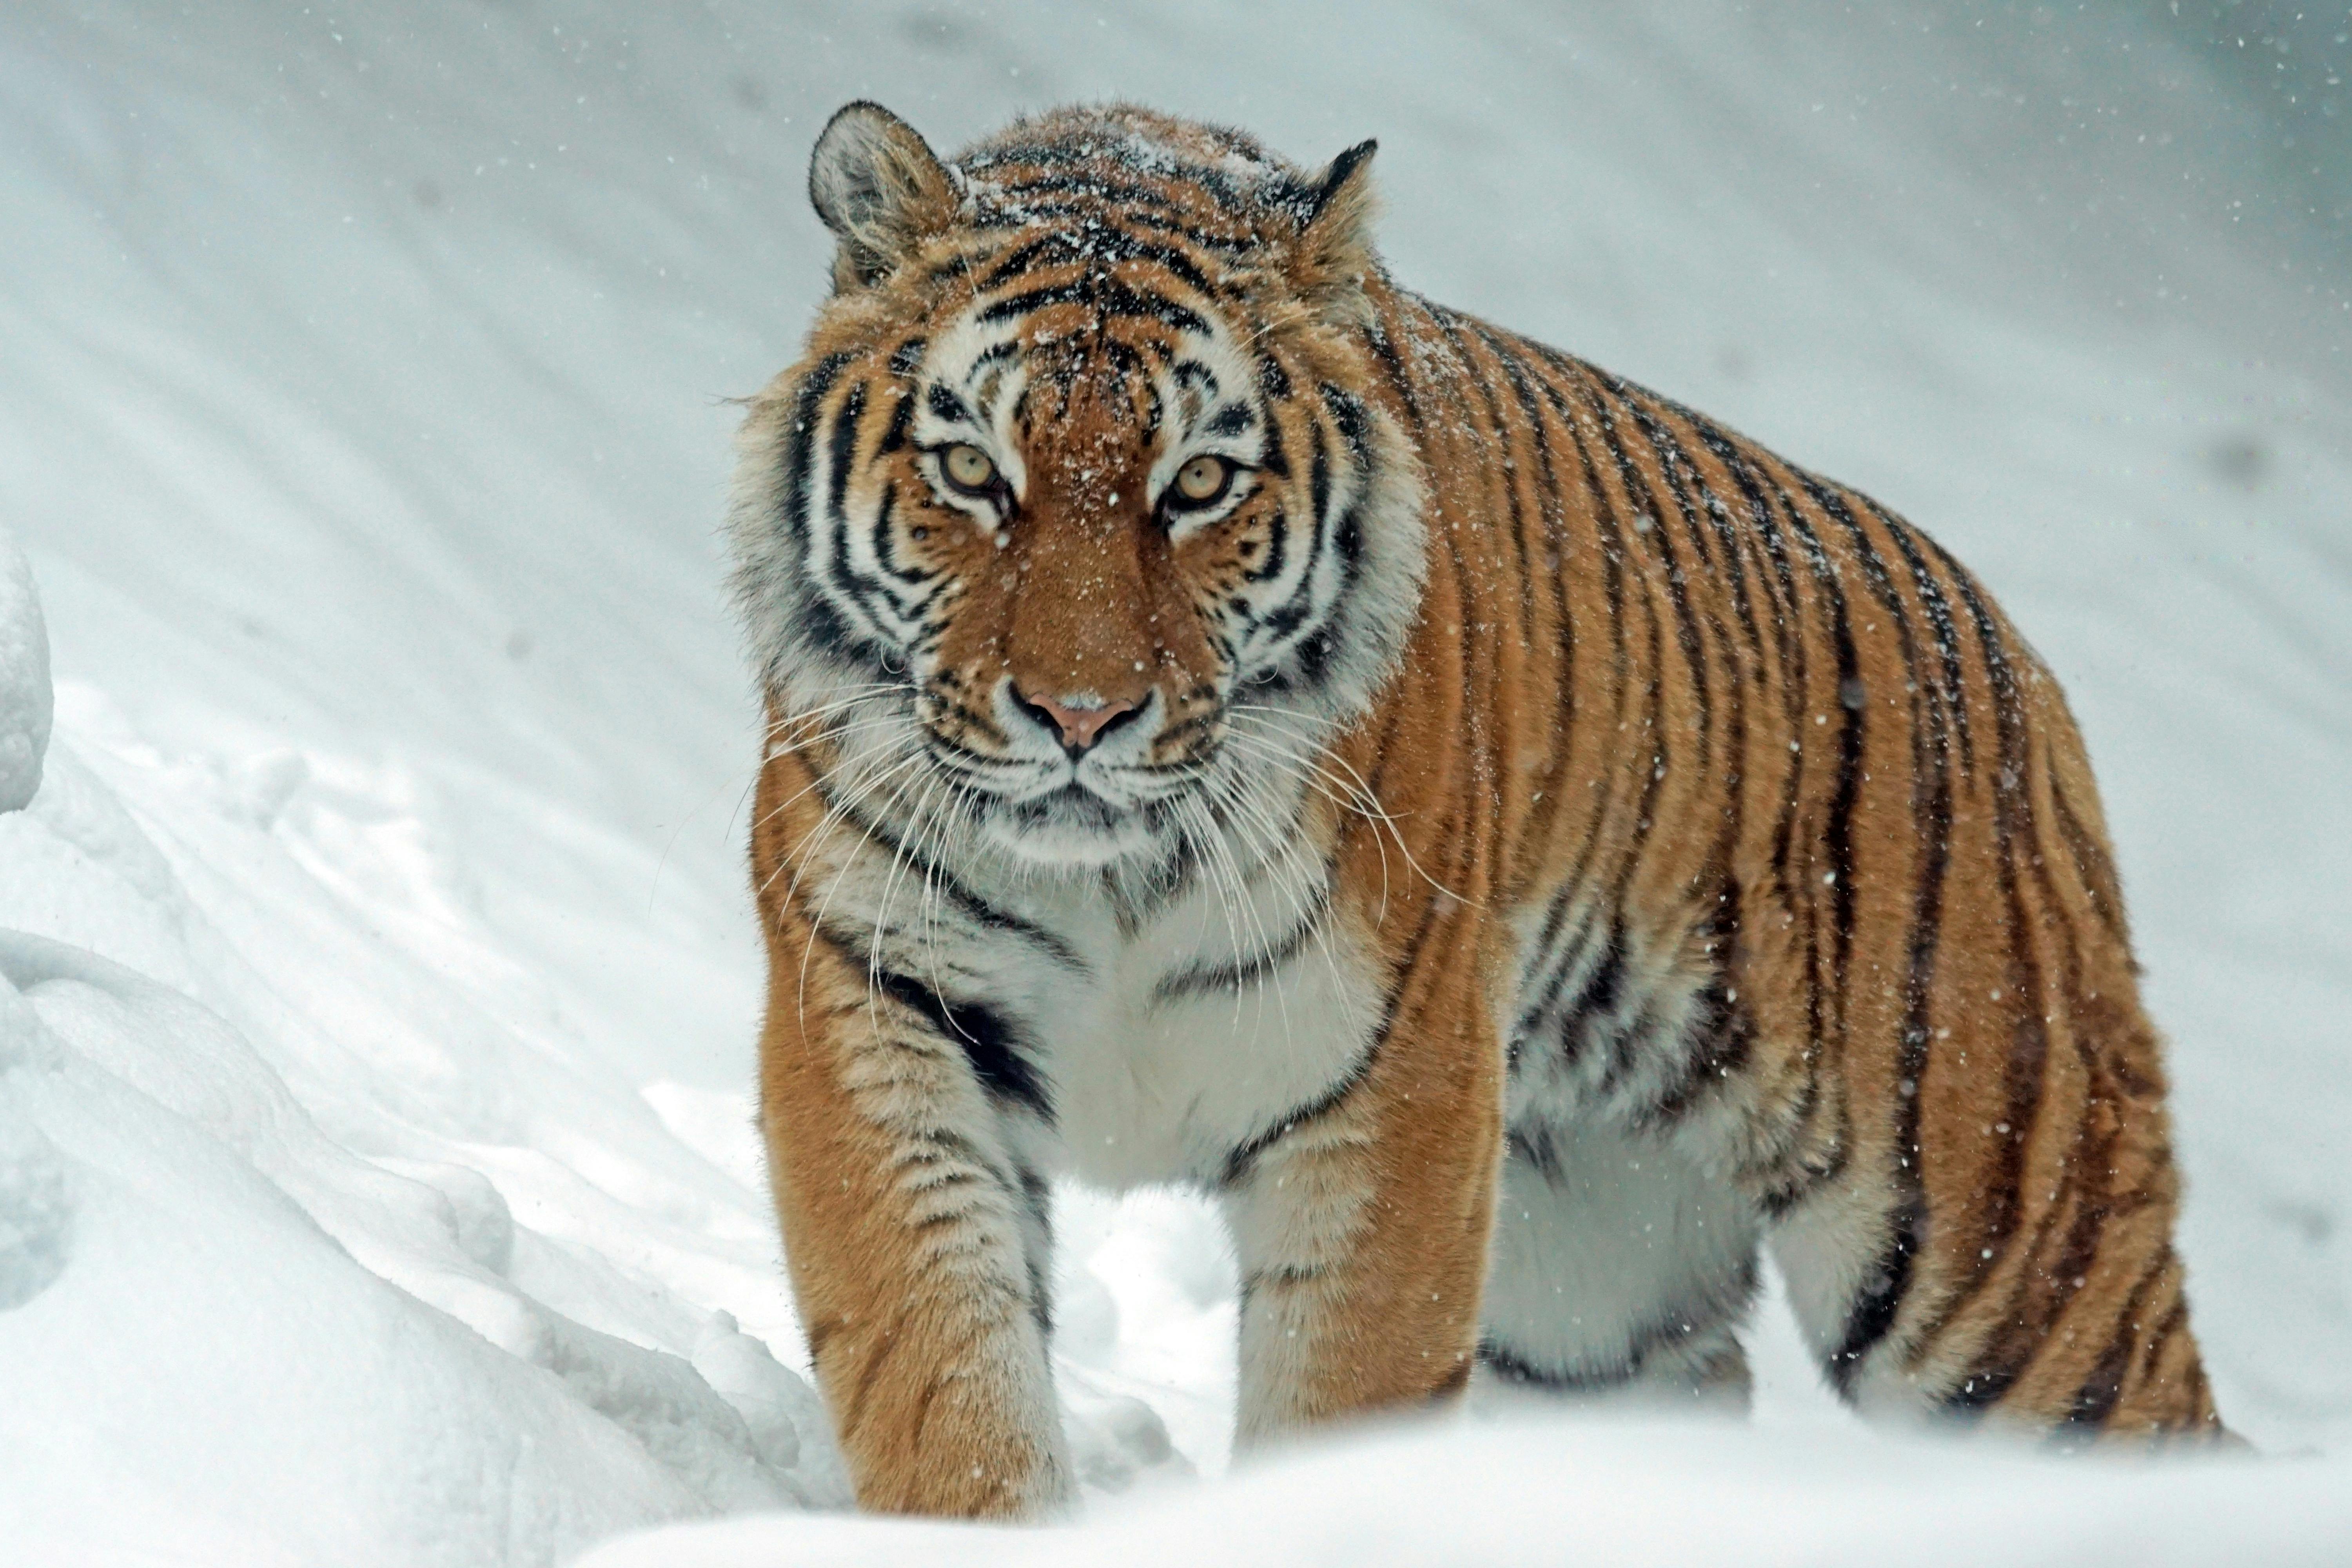 A tiger walking on snow.